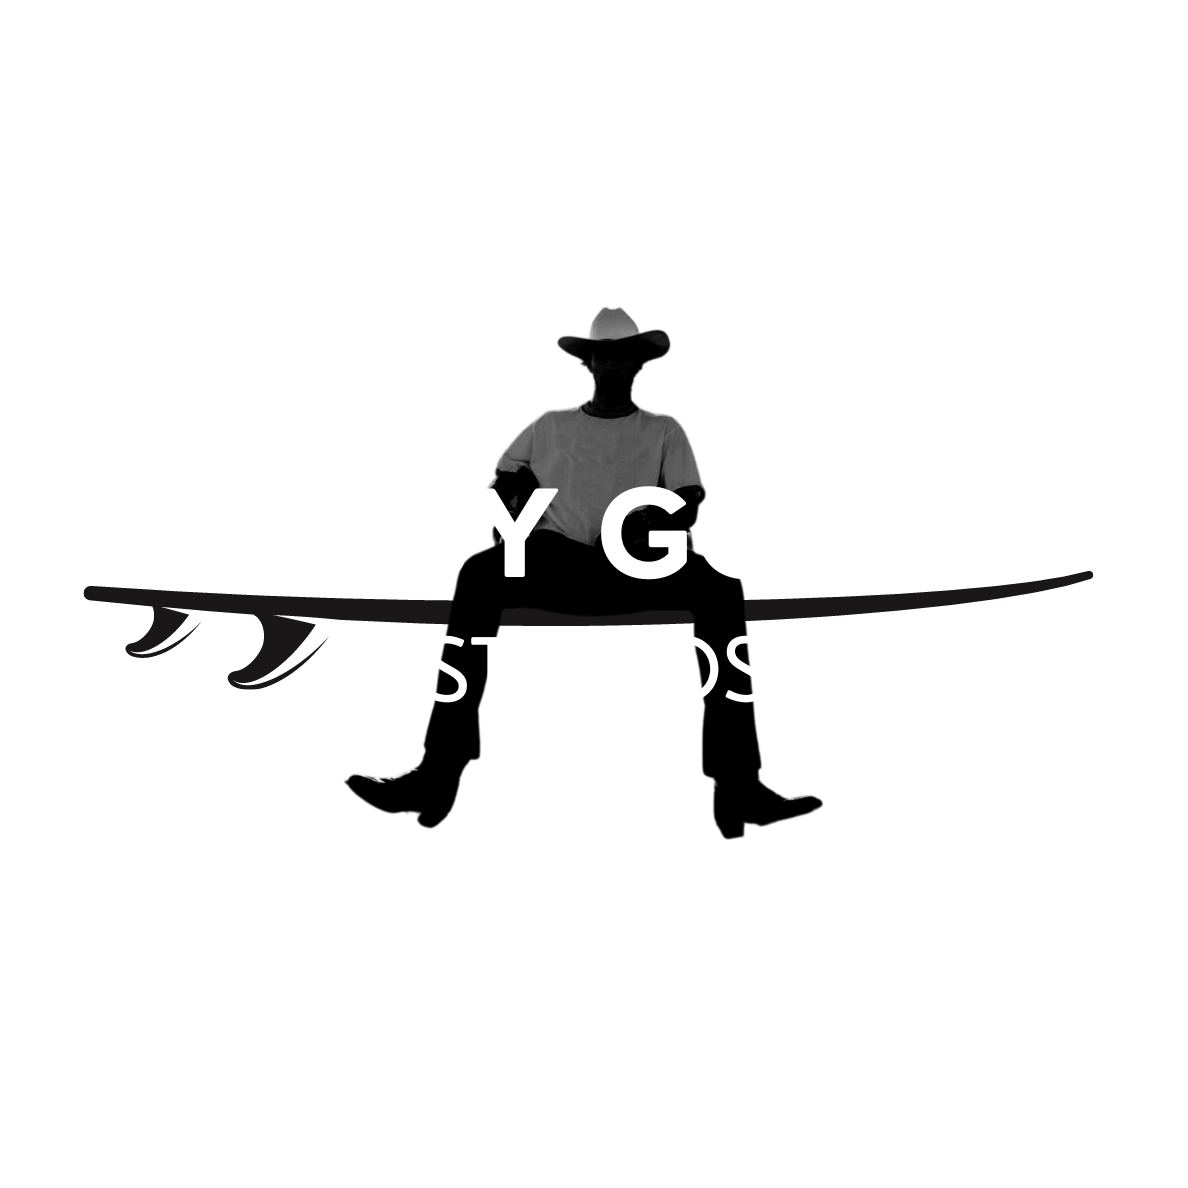 Easy Going Studios